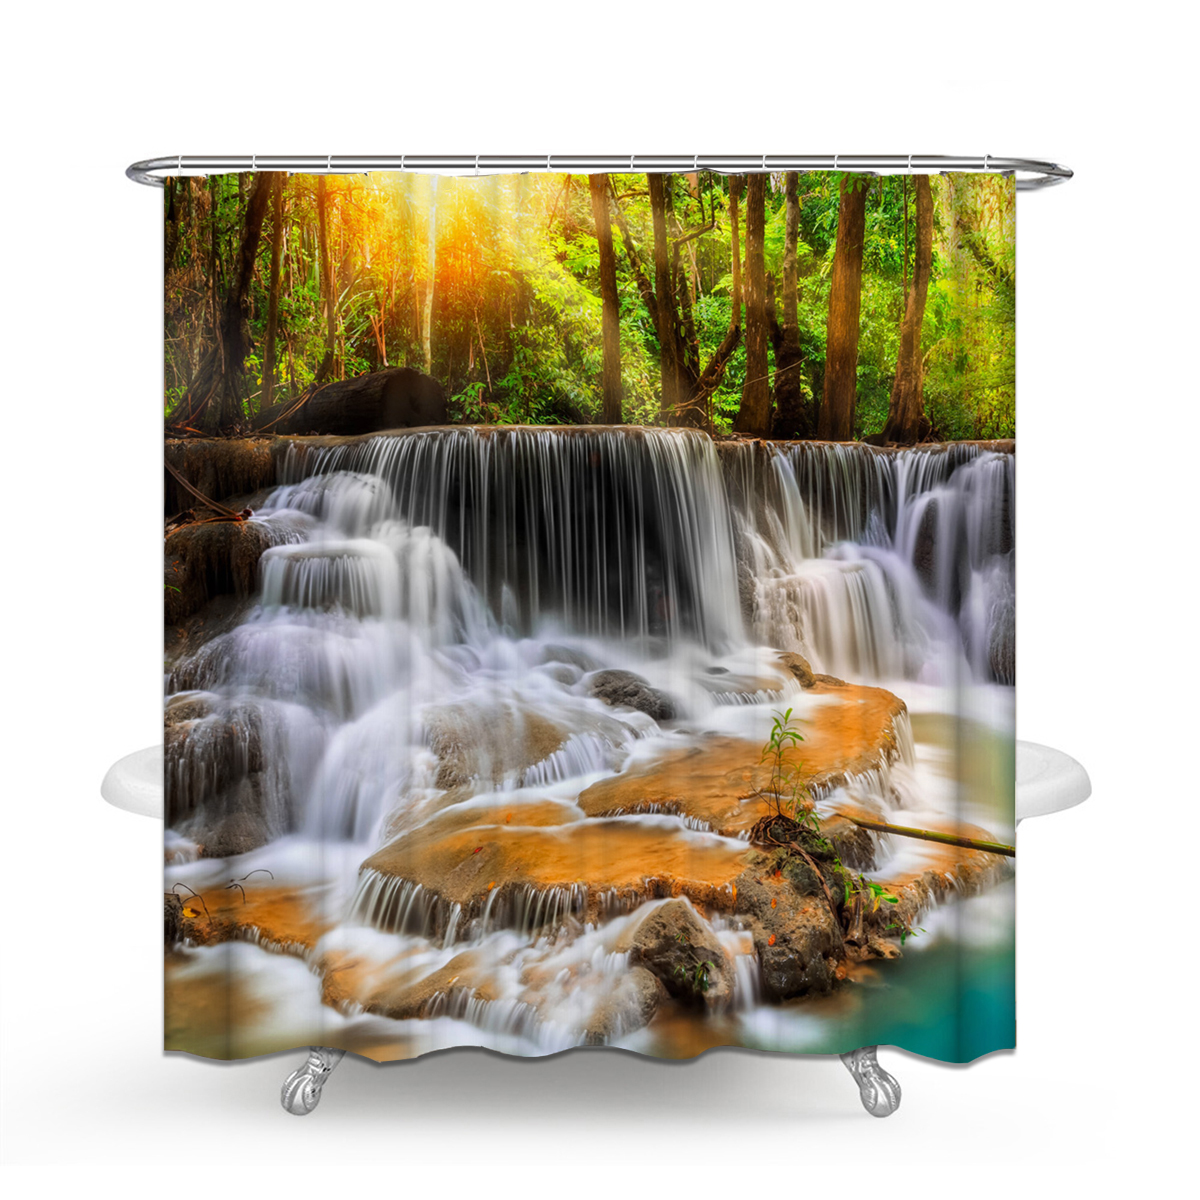 180x180CM-Waterfall-Printing-Waterproof-3PCS-Toilet-Cover-Mat-Non-Slip-Rug-Set-1920569-3